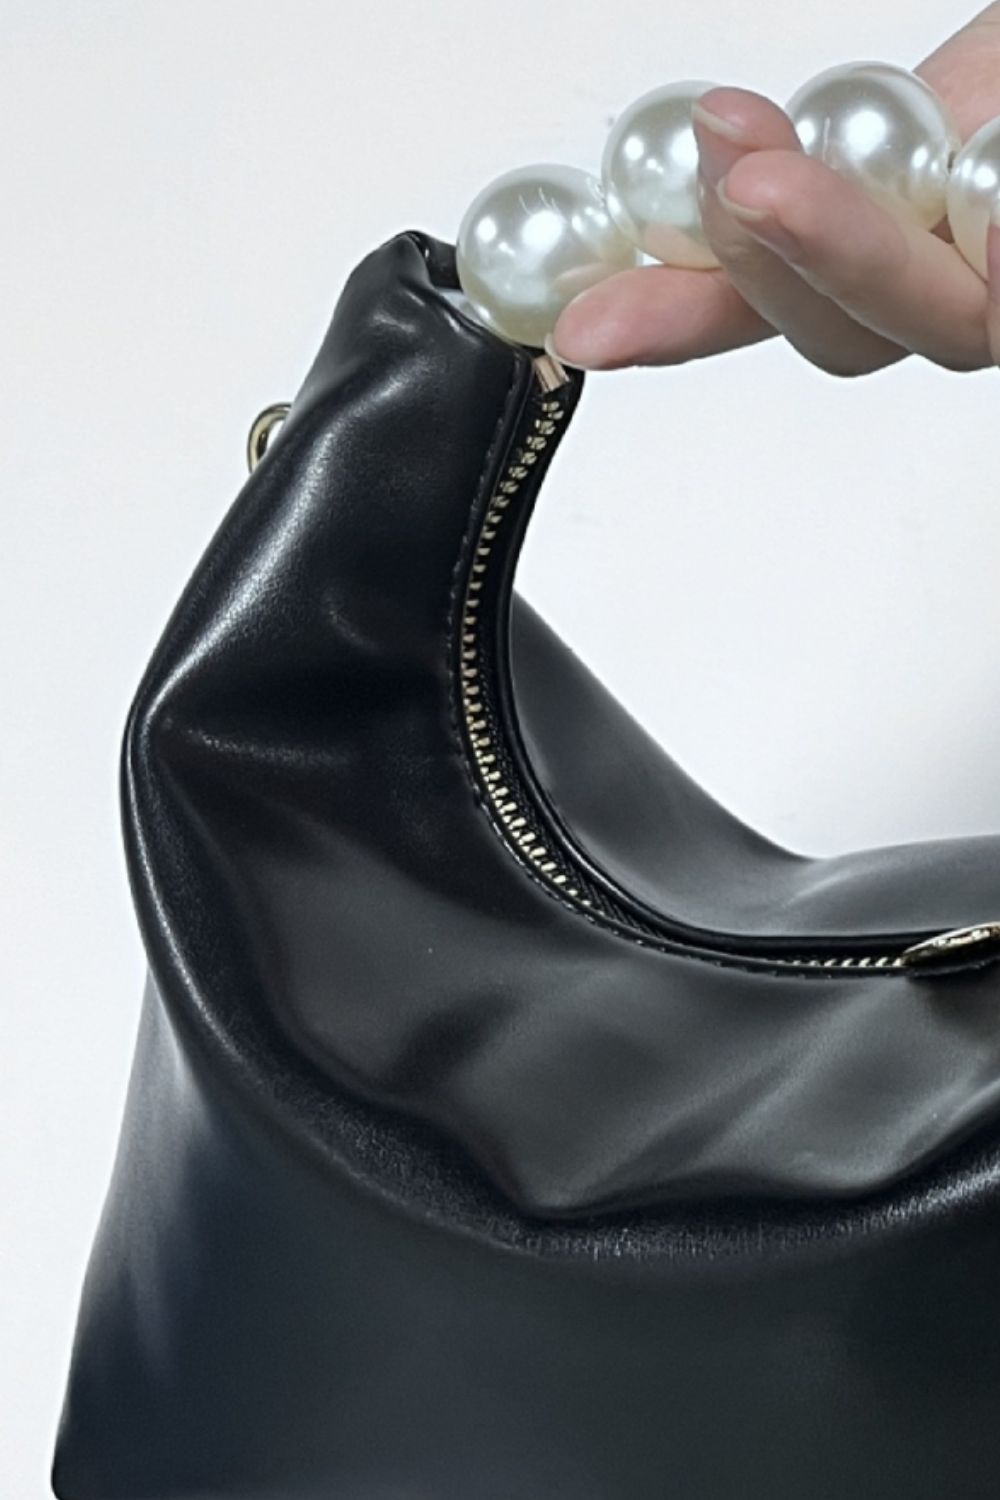 Adored PU Leather Pearl Handbag (5 Colors)